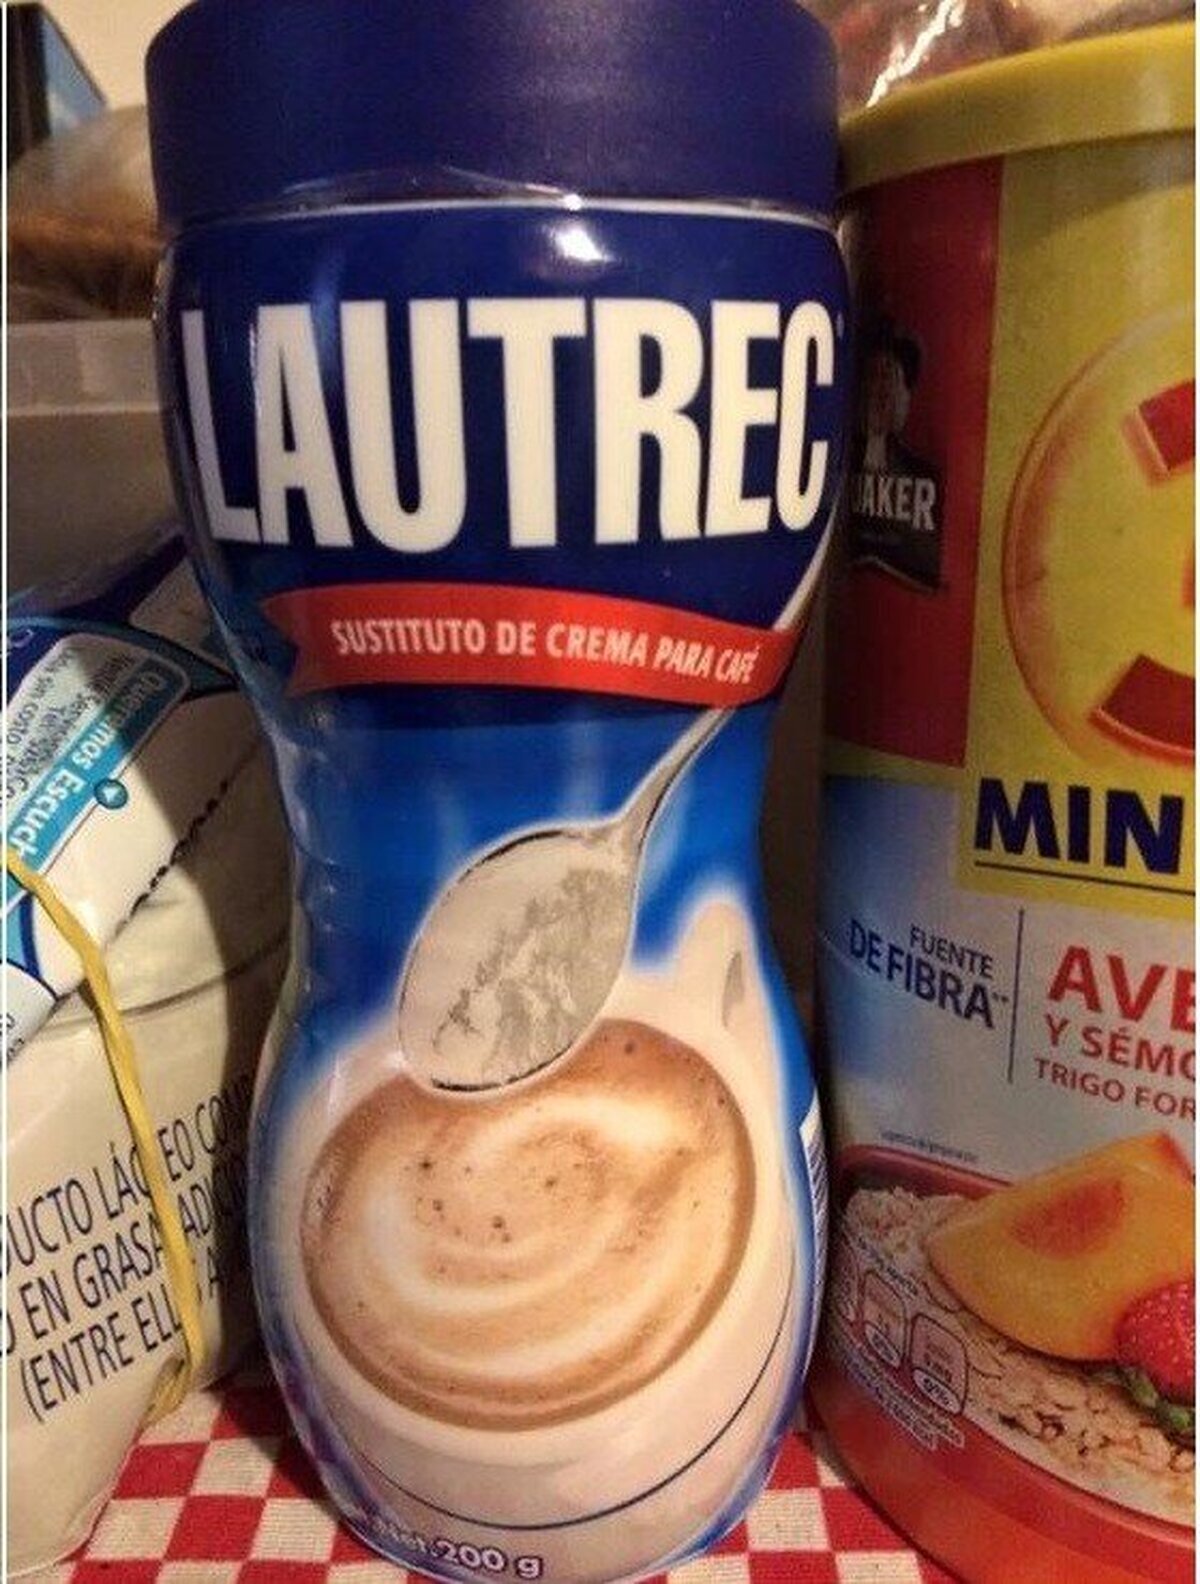 ¿Porque sera´ que siento desconfianza de esta crema para cafe?